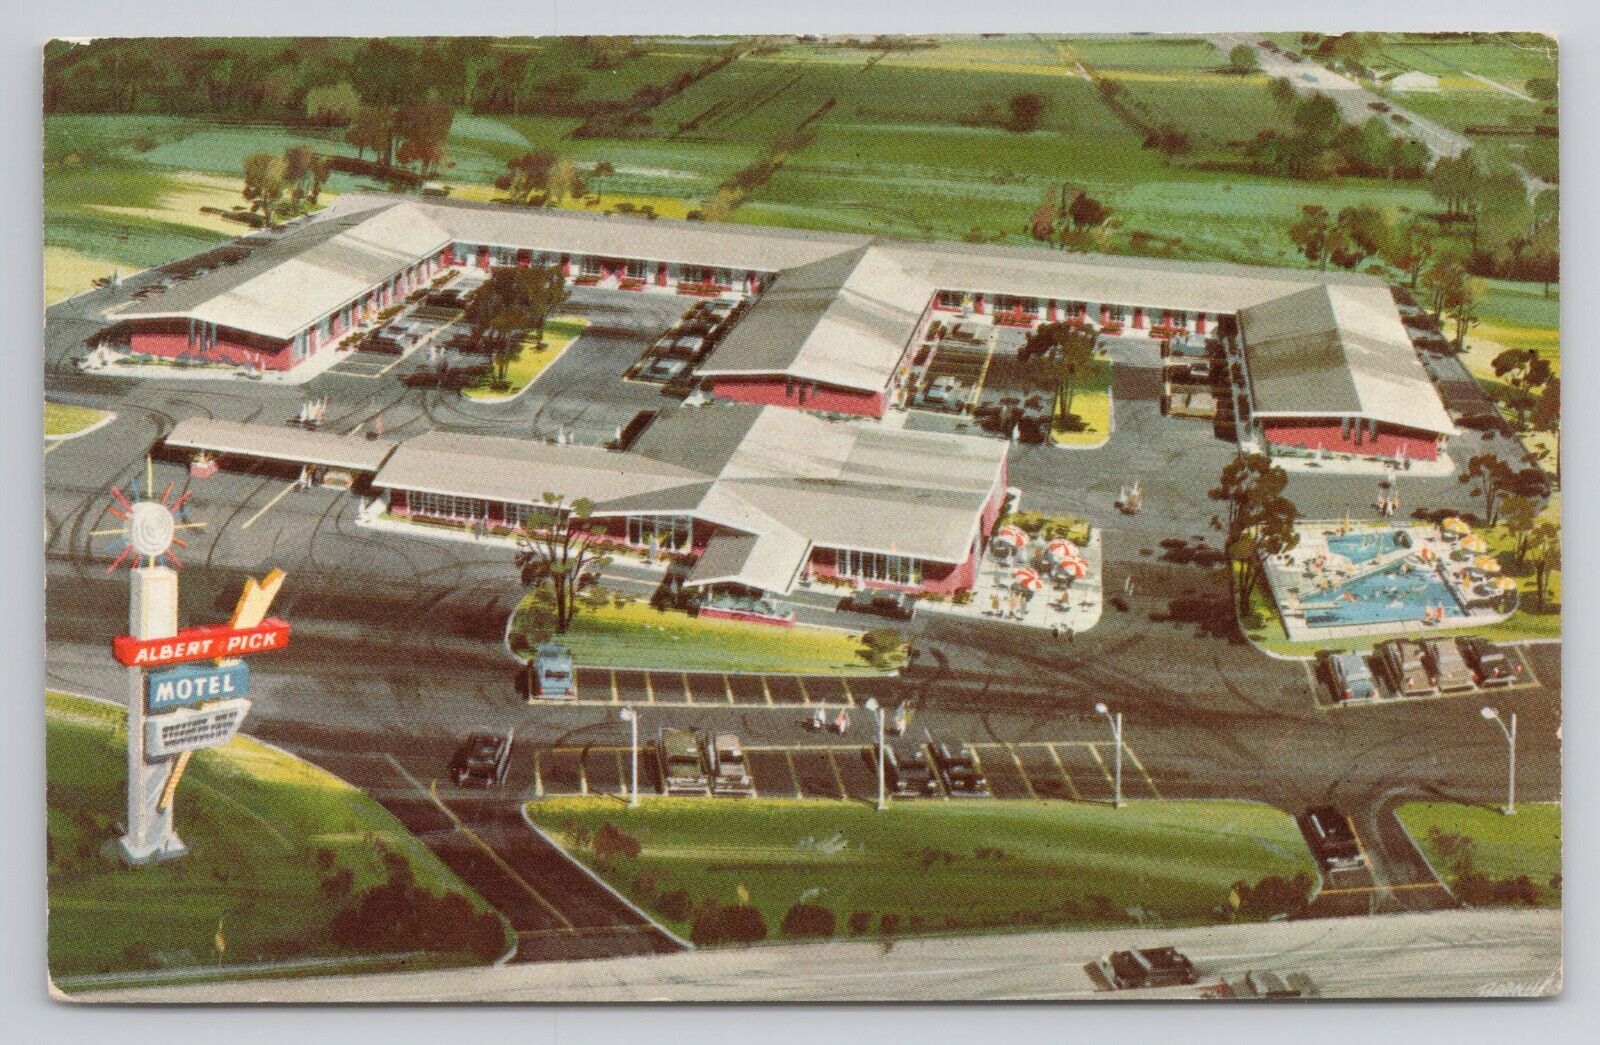 Postcard Albert Pick Motel St Louis Missouri